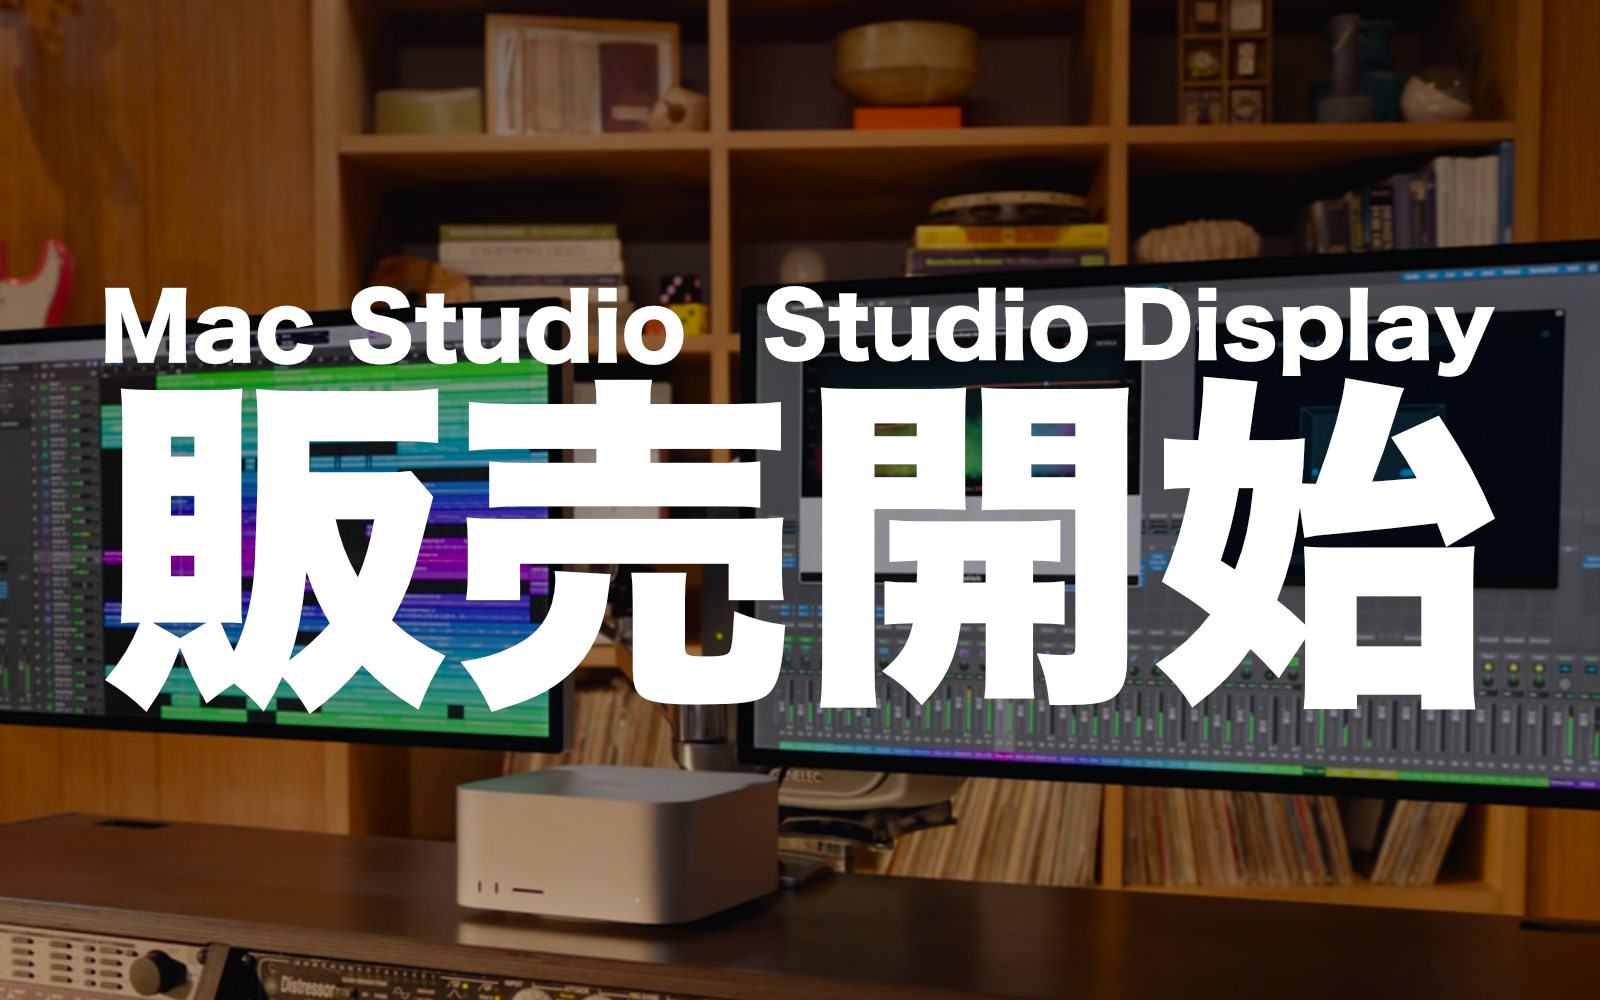 MacStudio-and-StudioDisplay-now-on-sale.jpg